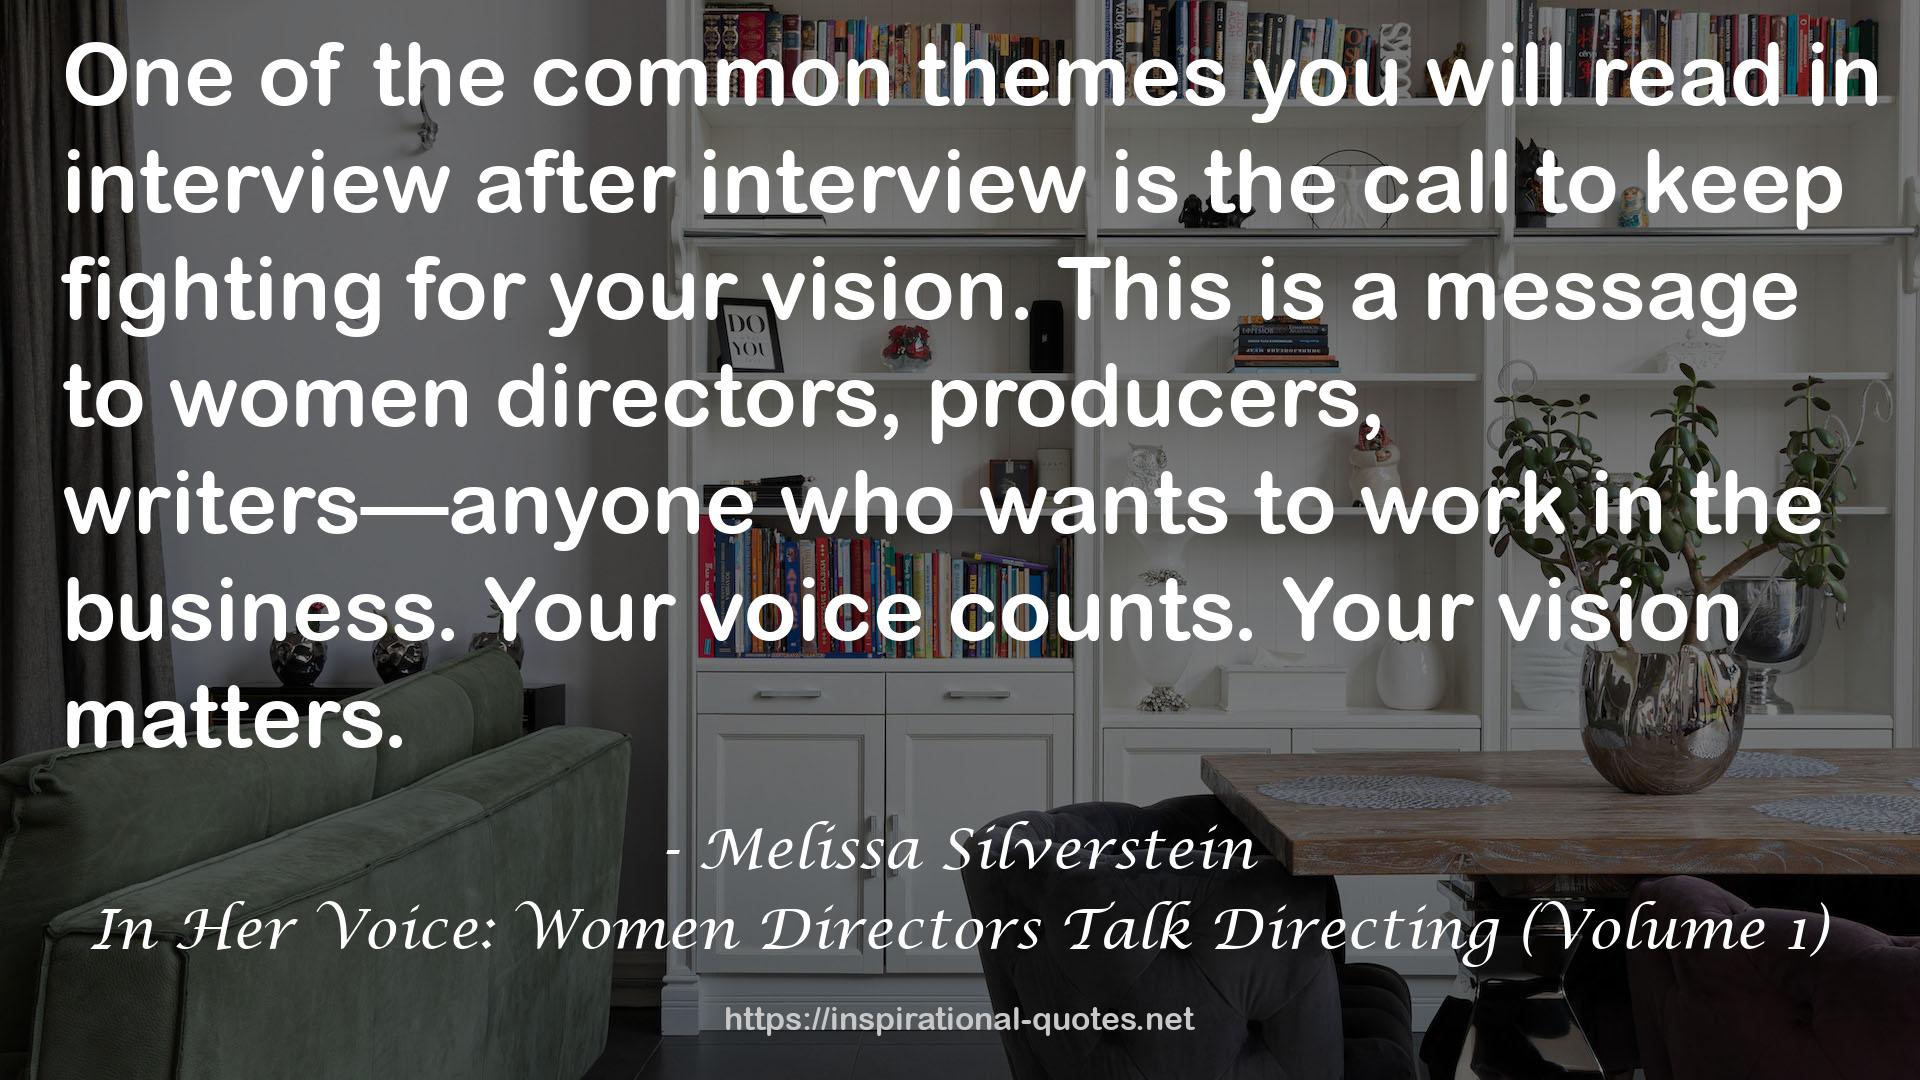 In Her Voice: Women Directors Talk Directing (Volume 1) QUOTES